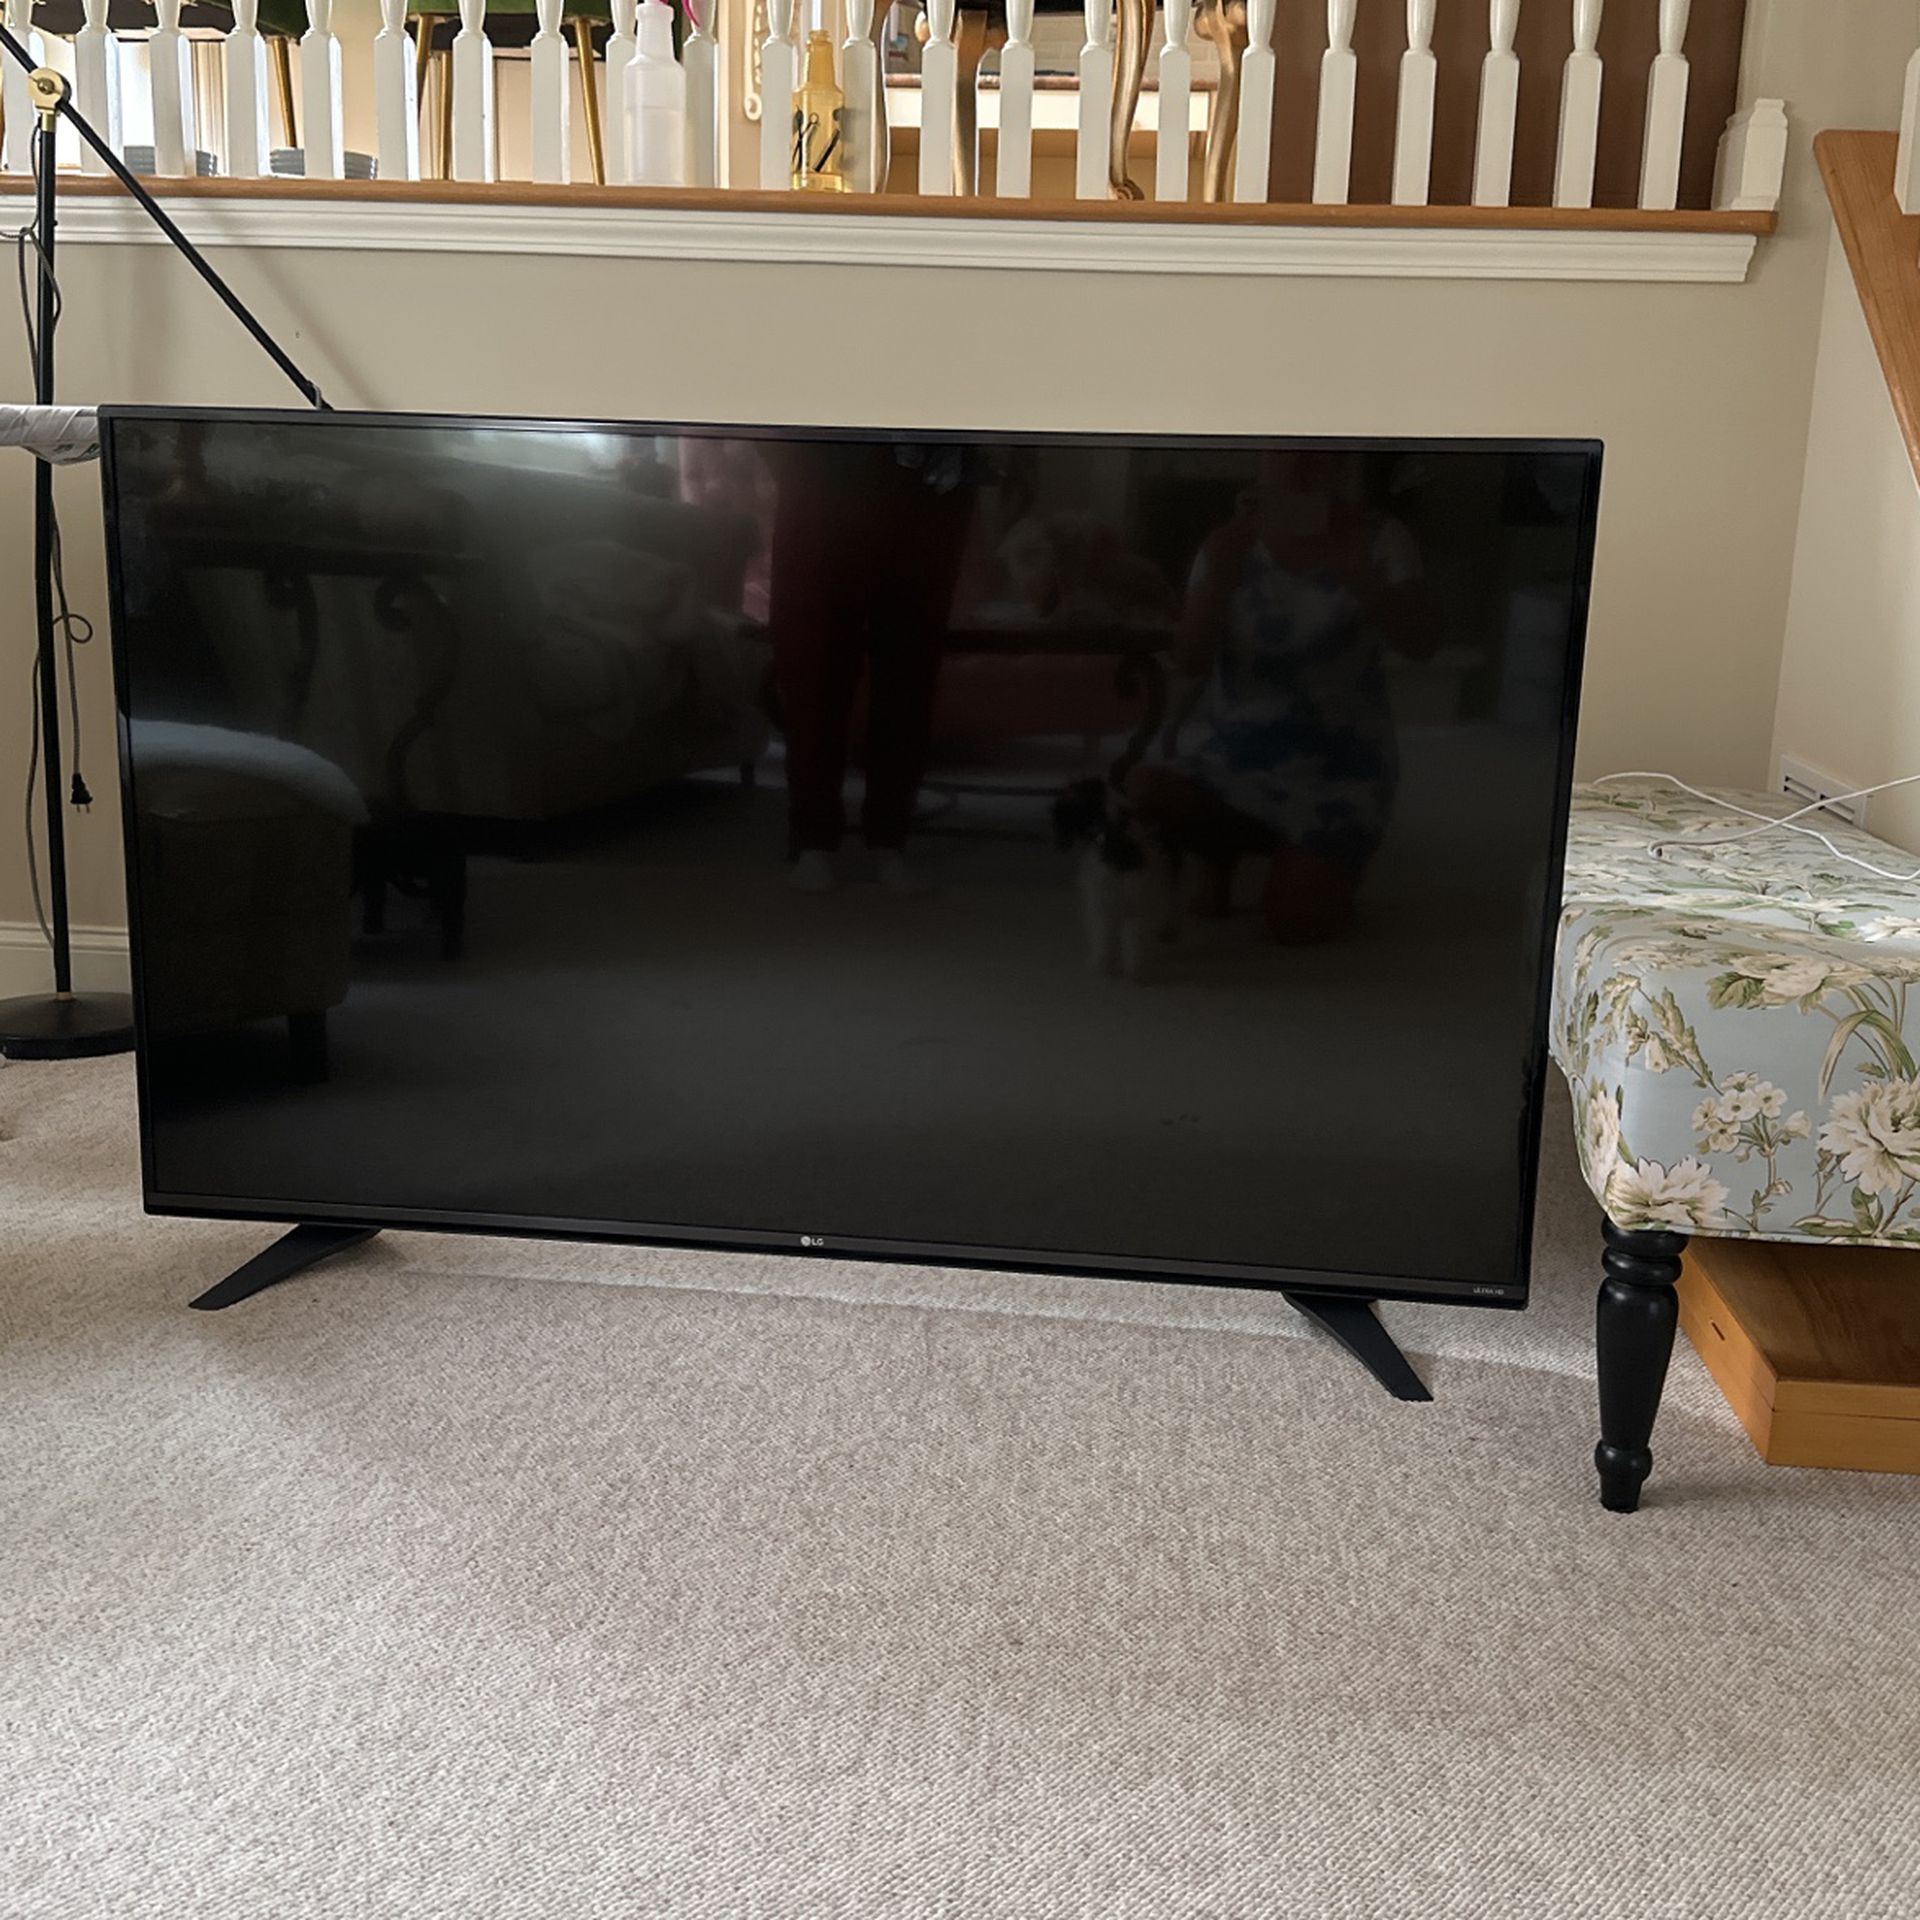 LG 55” Flat Screen TV